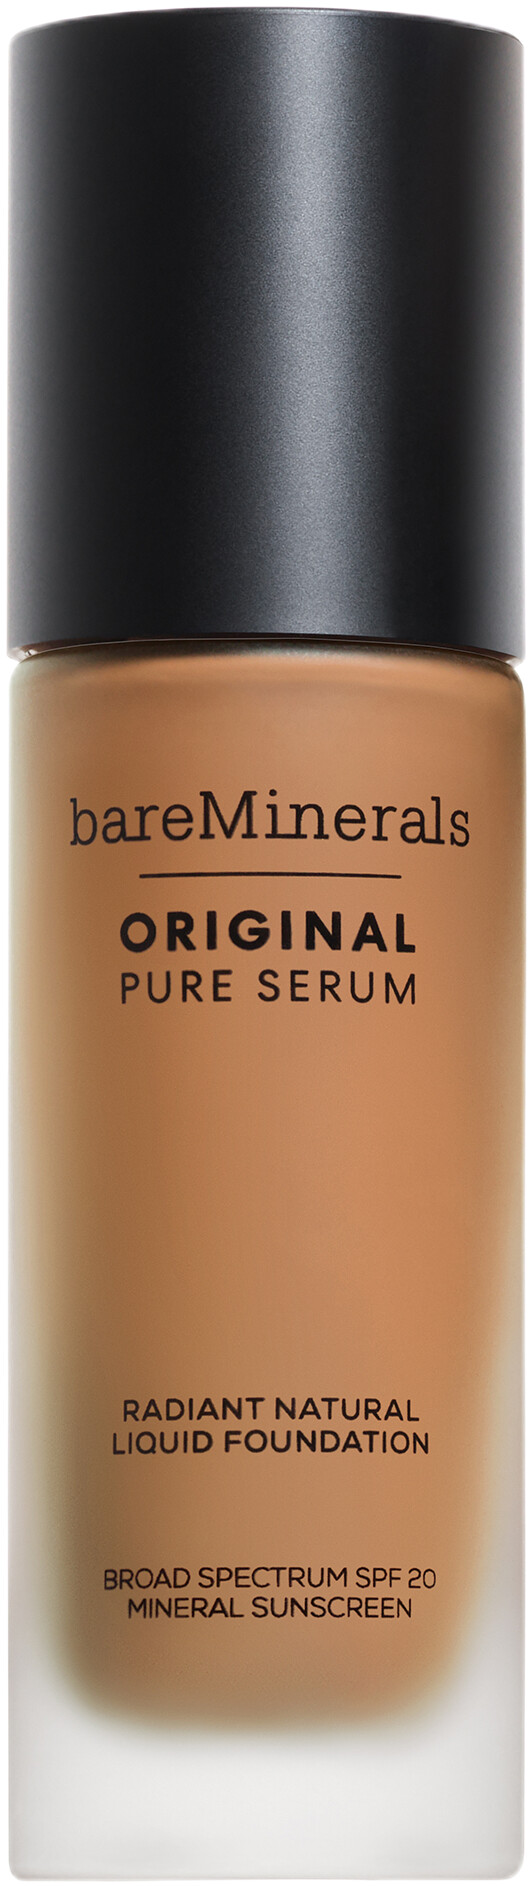 bareMinerals Original Pure Serum Radiant Natural Liquid Foundation SPF20 30ml 4 - Medium Deep Warm